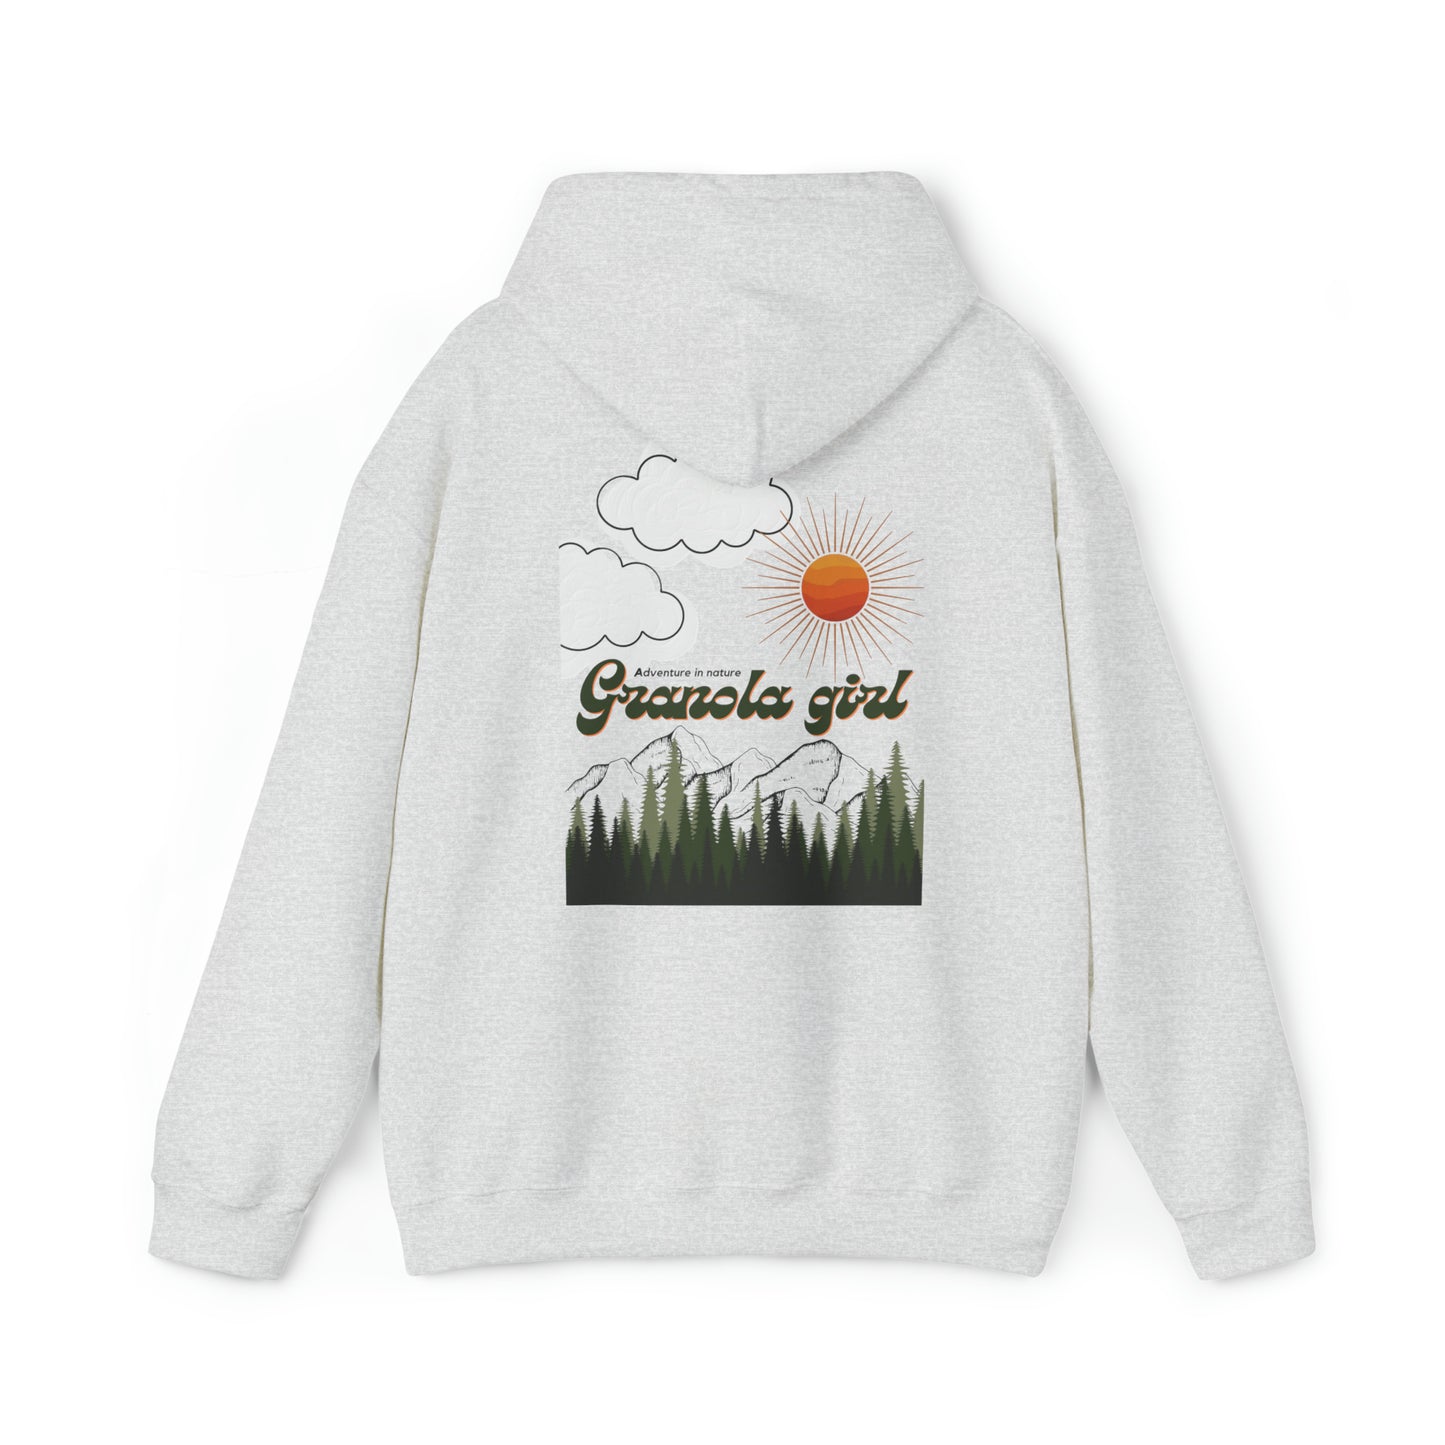 Granola girl hoodie